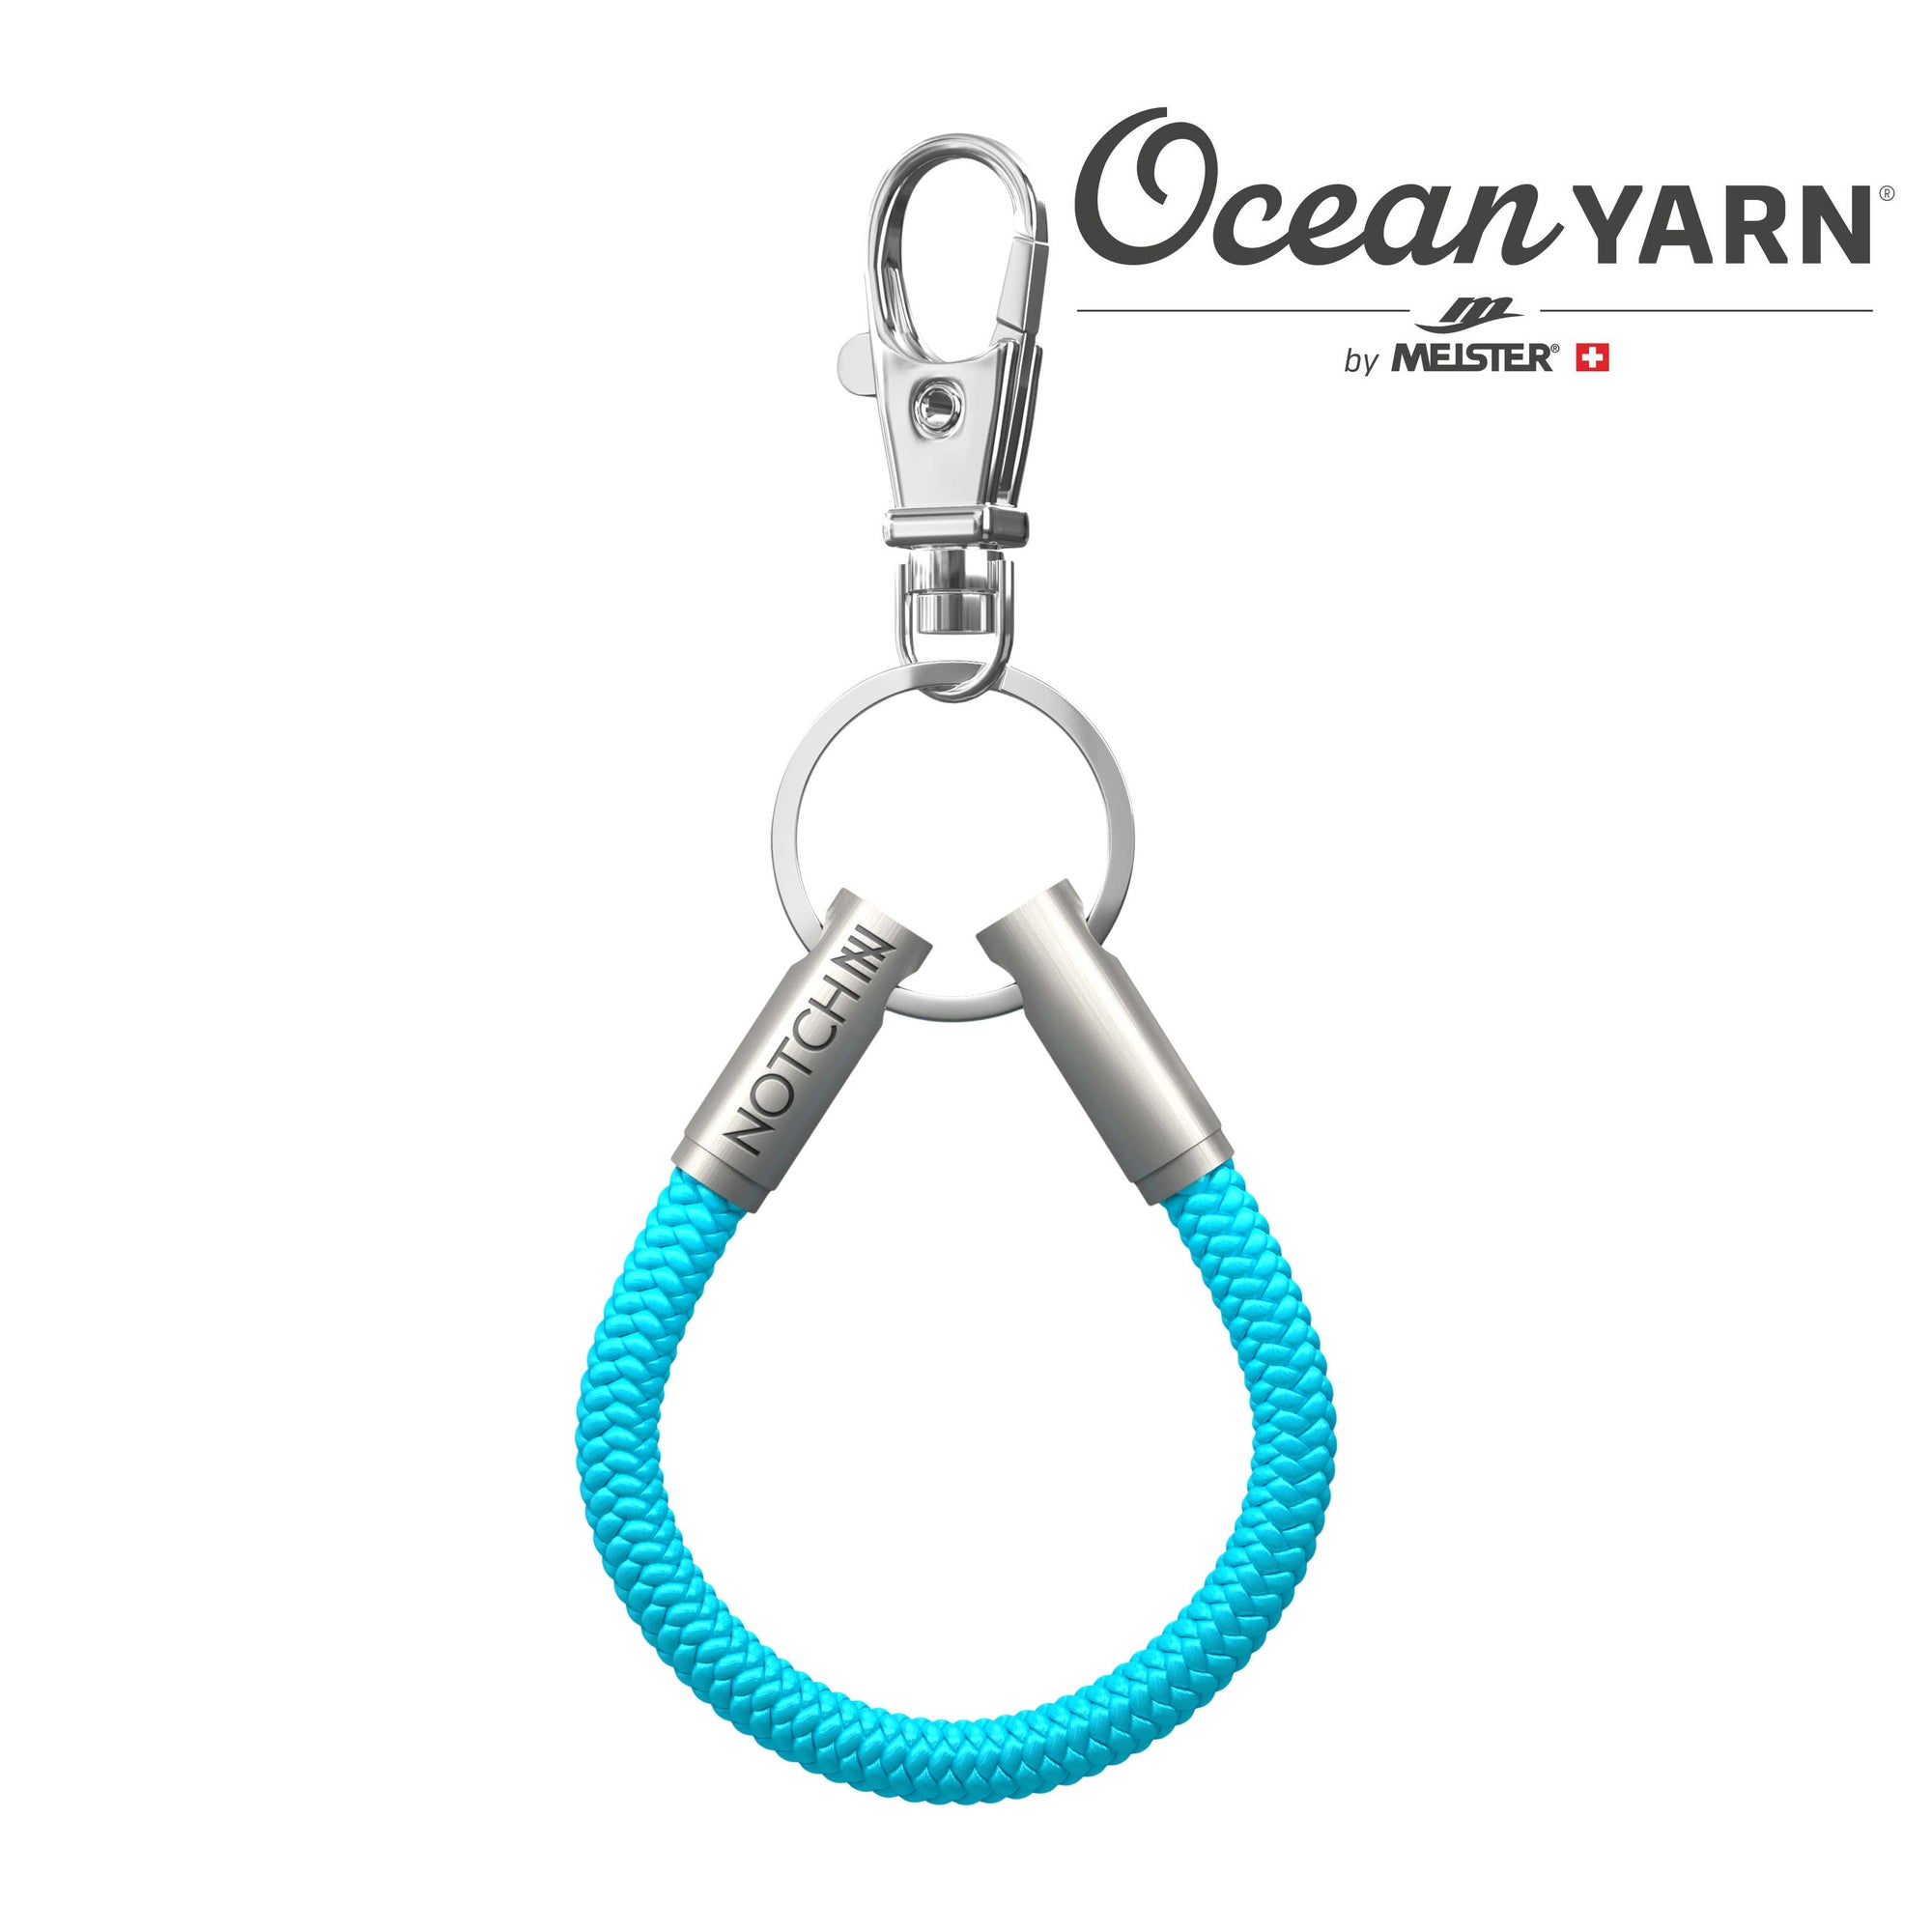 Sustainable OceanYarn NOTCH Loop - Aqua Marine with stainless steel ends